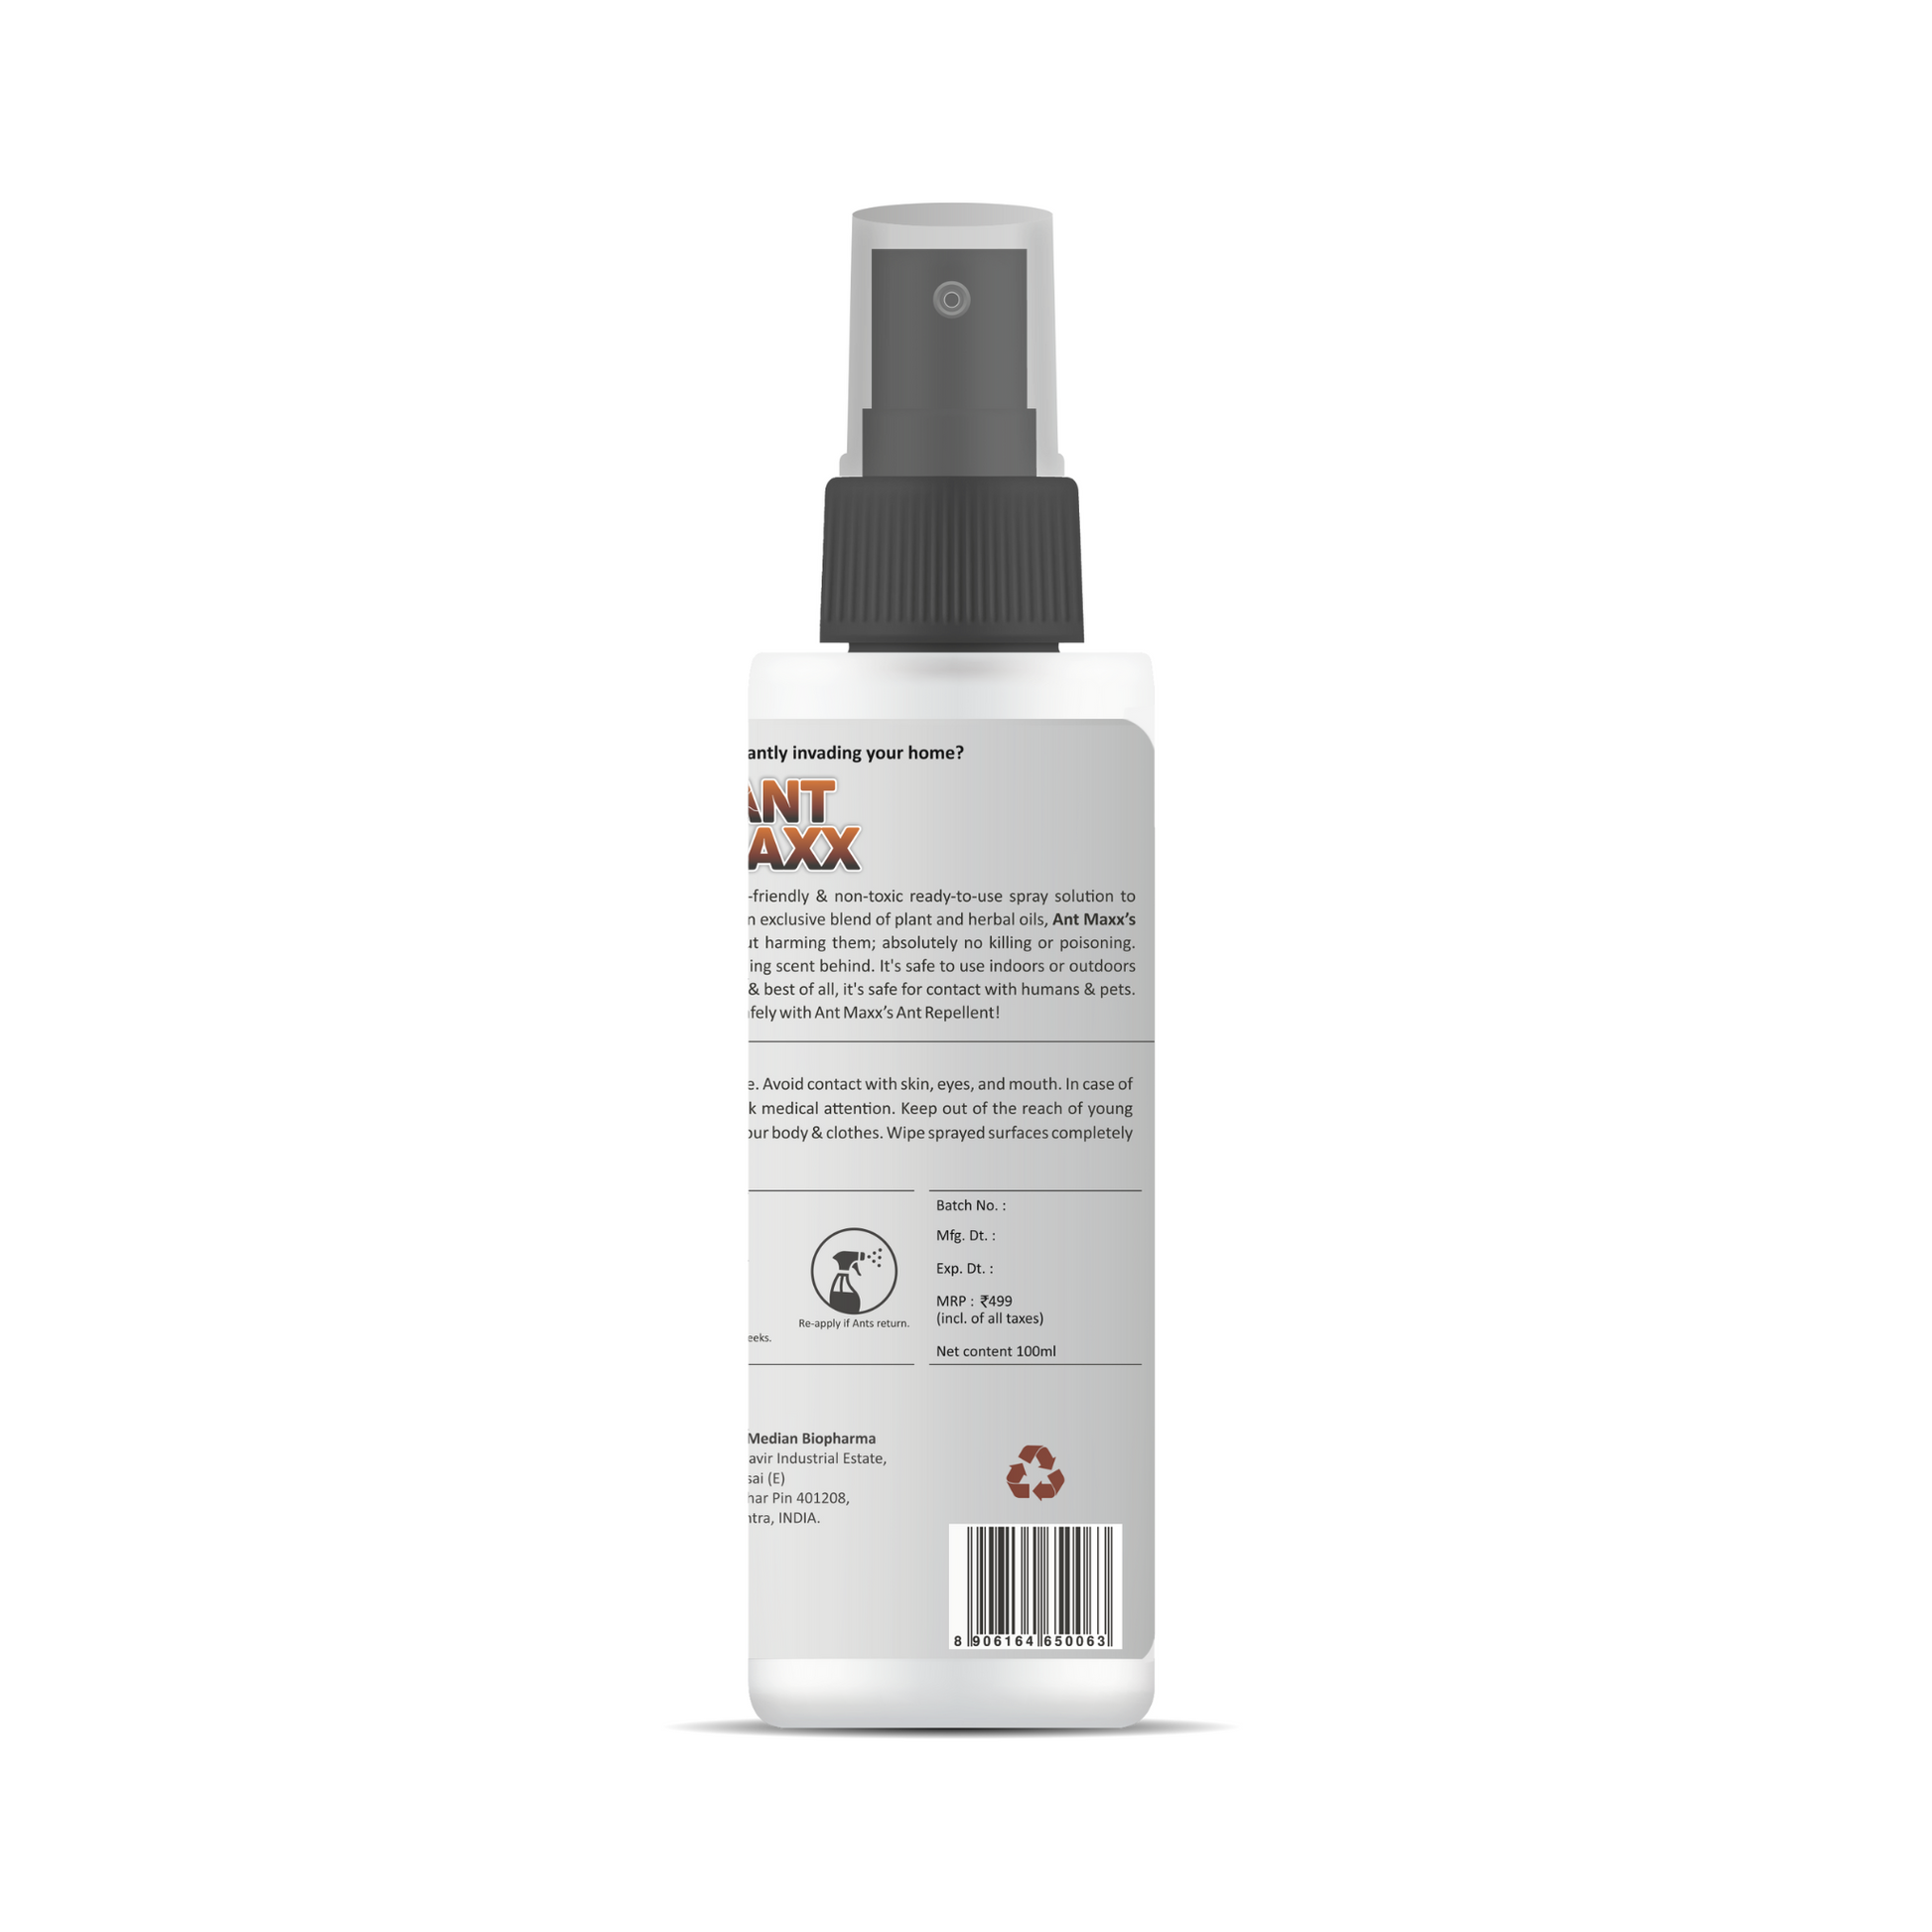 Zyax Ant Maxx - Ant Repellent Spray - Zyax.in